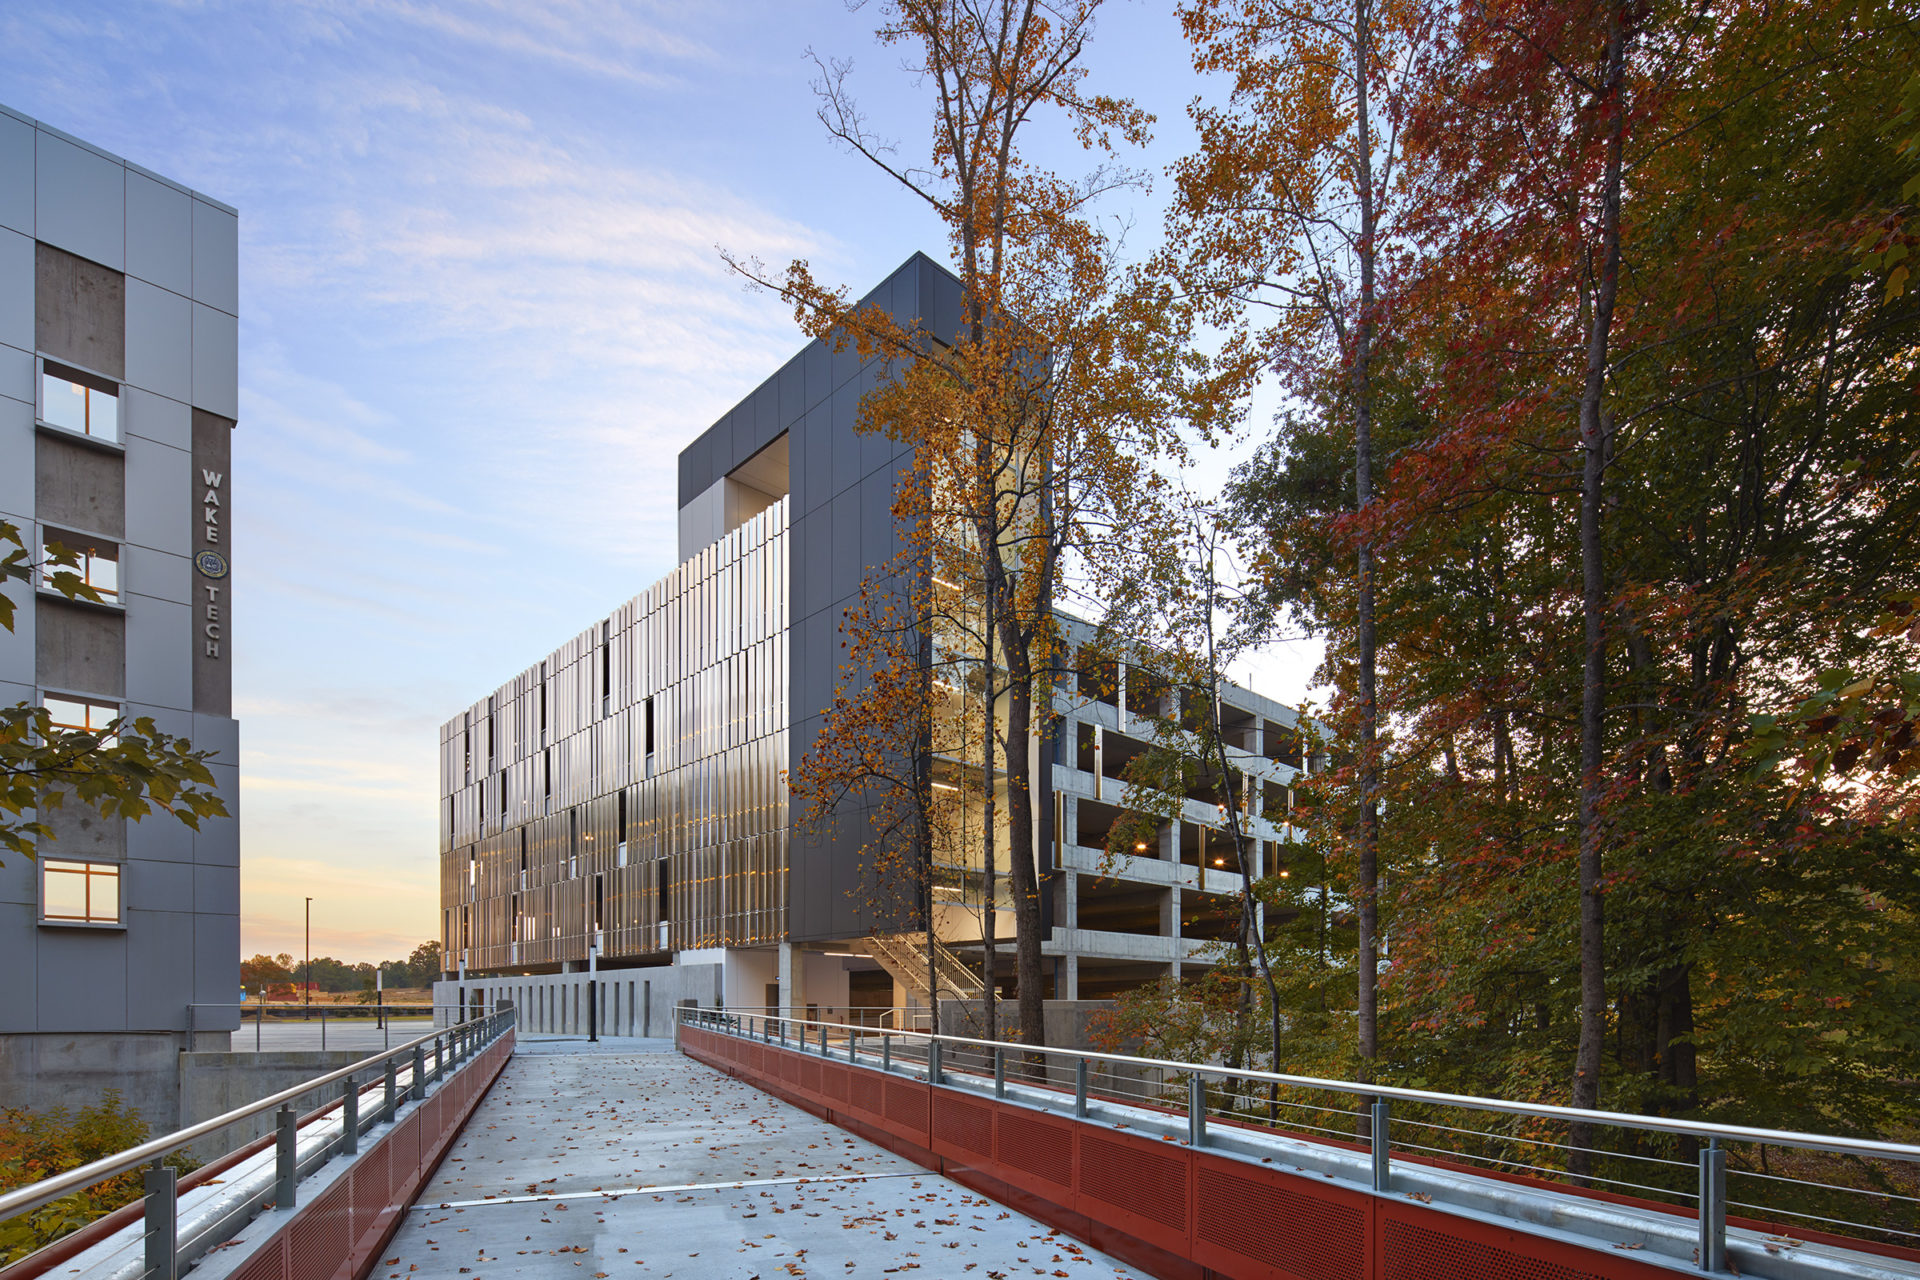 Parking Deck 2 at Wake Tech Community College in Raleigh, NC; Architect: Clark Nexsen